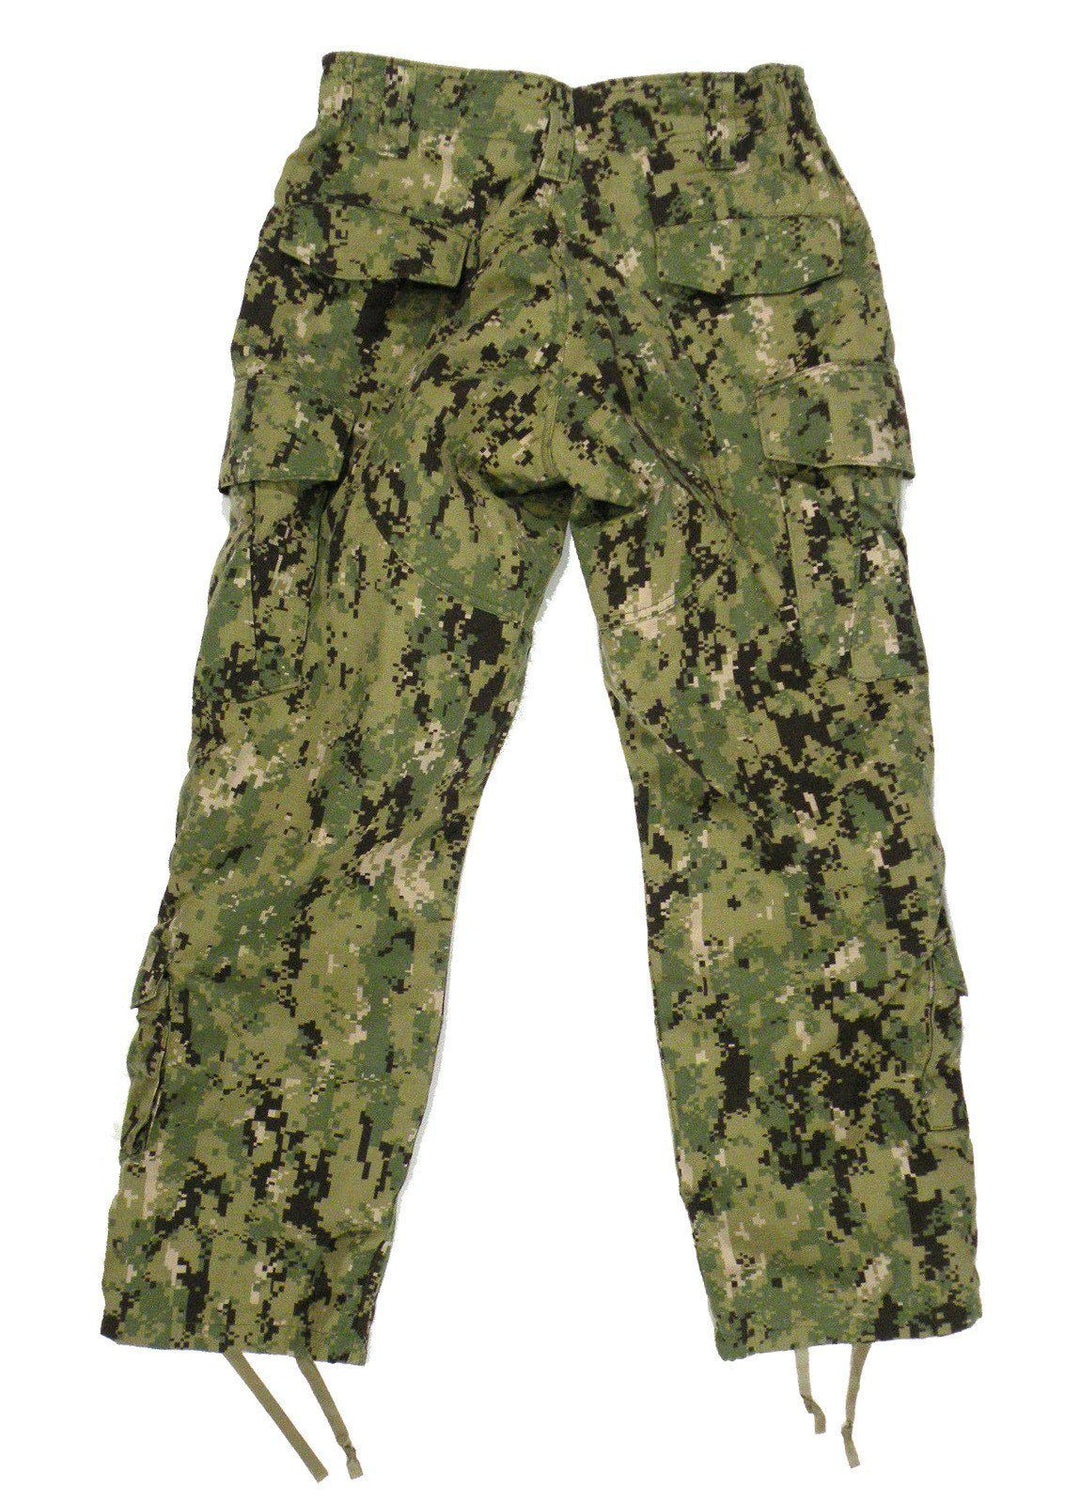 Apparel - Bottoms - Uniform - USGI US Navy Working Uniform NWU Type III Woodland Trouser